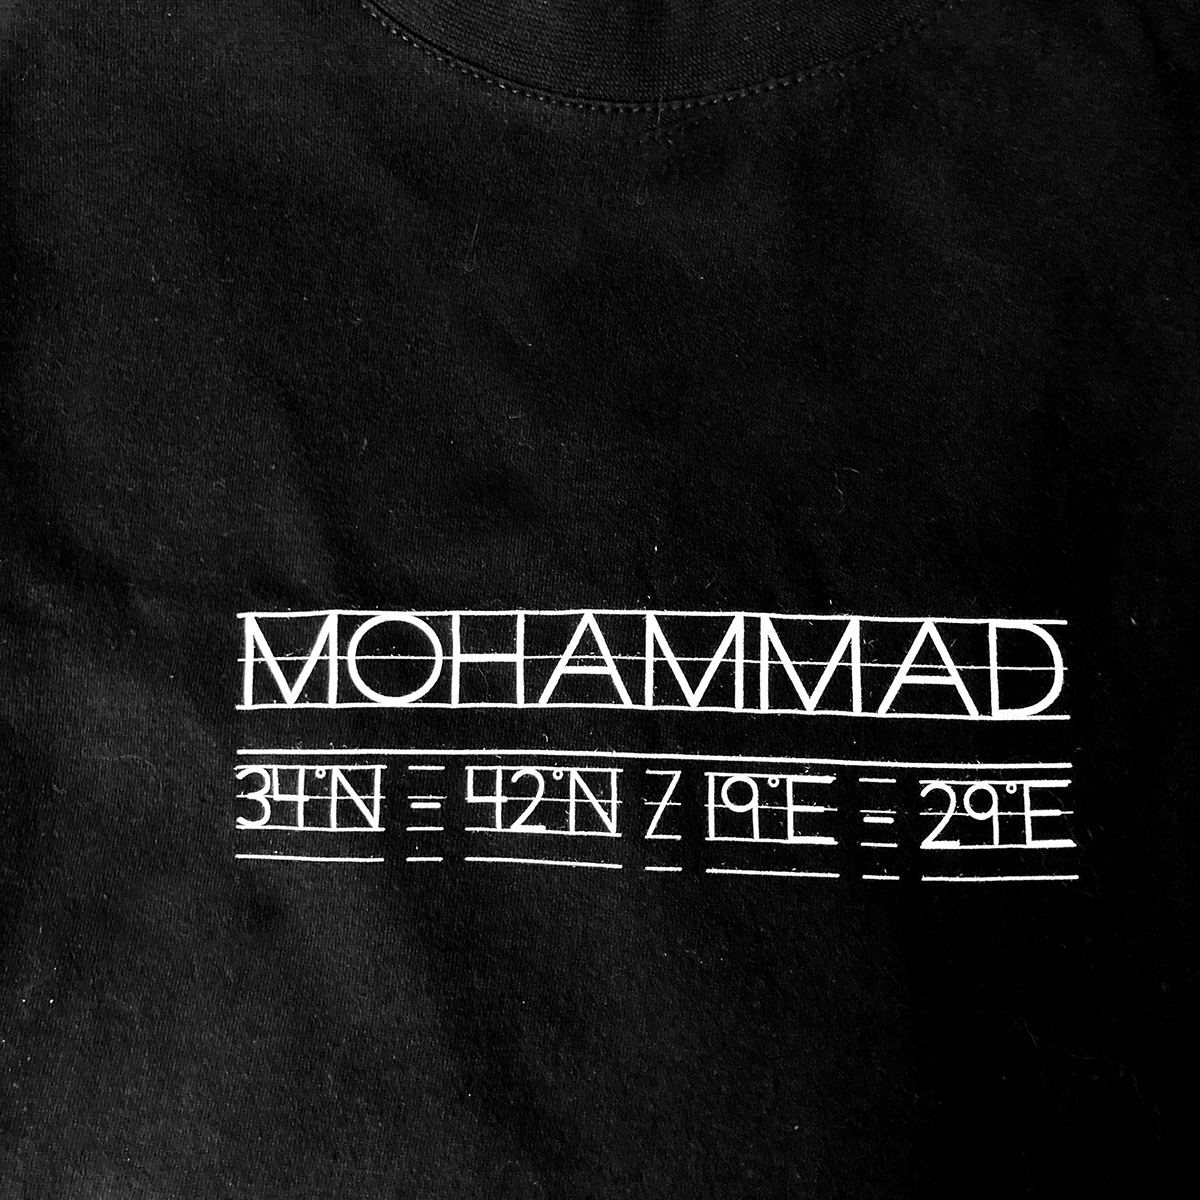 Mohammad – “Trilogy” t-shirt